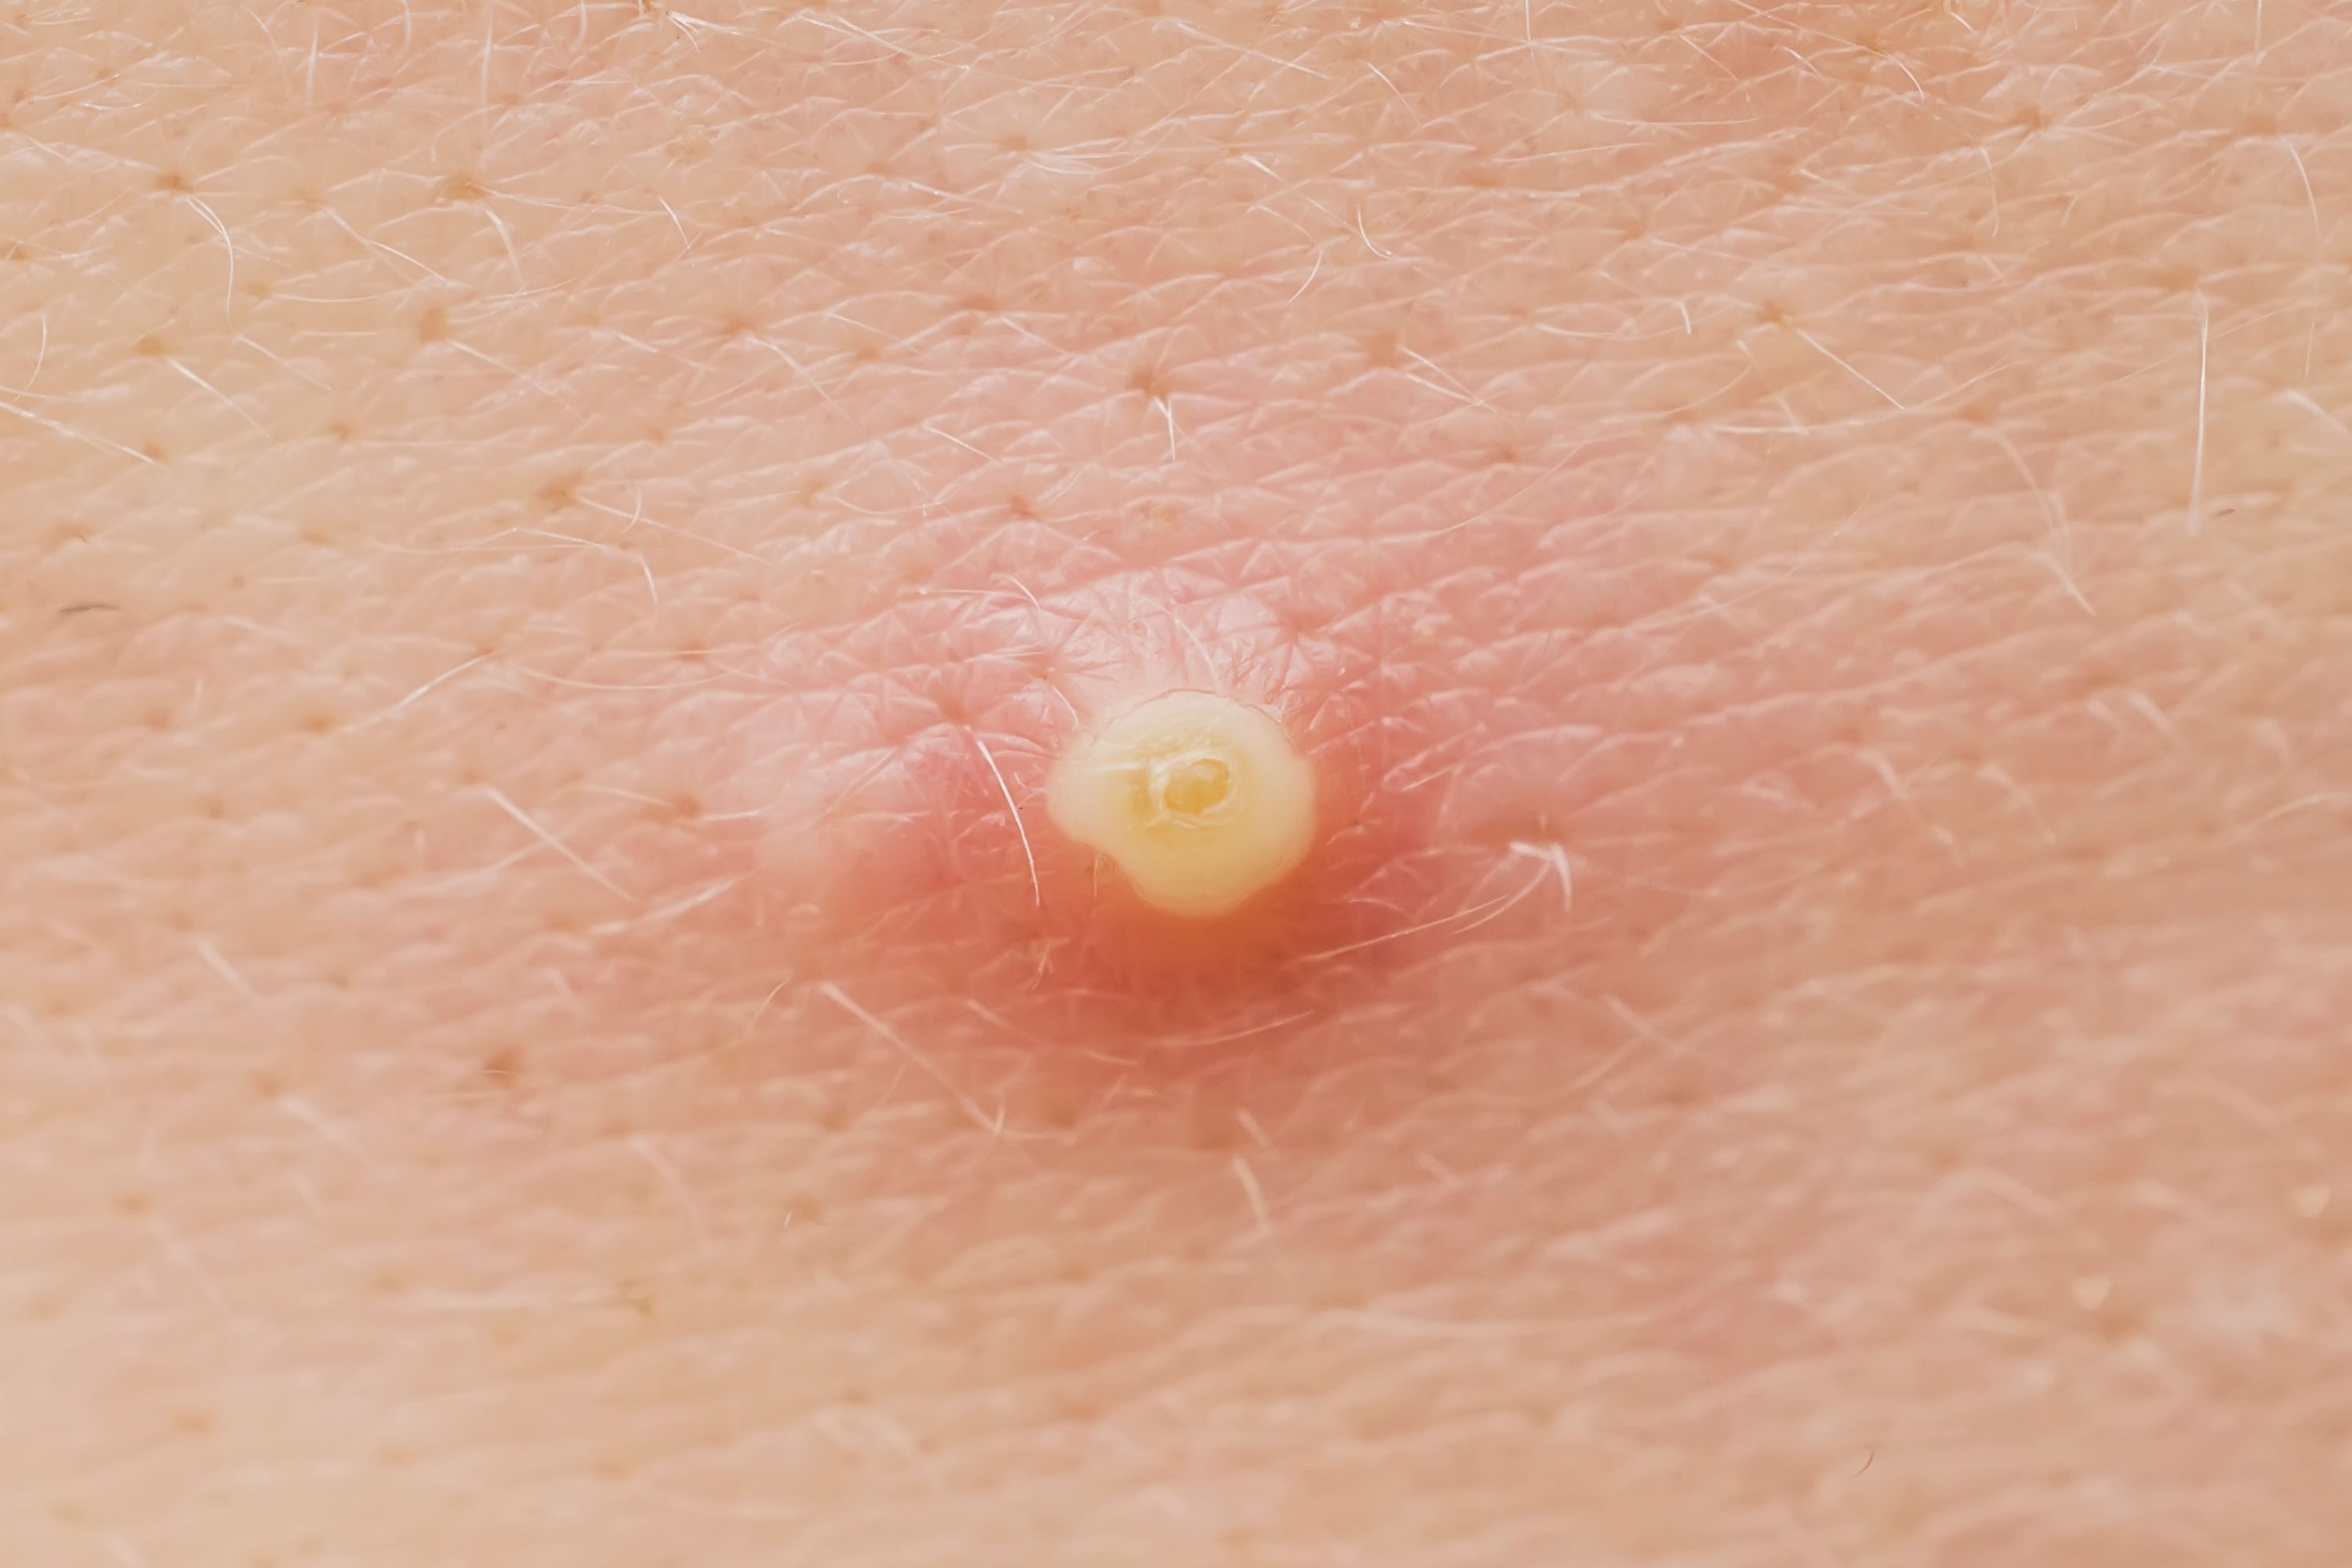 Pimple on Nipple: Causes, Symptoms and Treatment